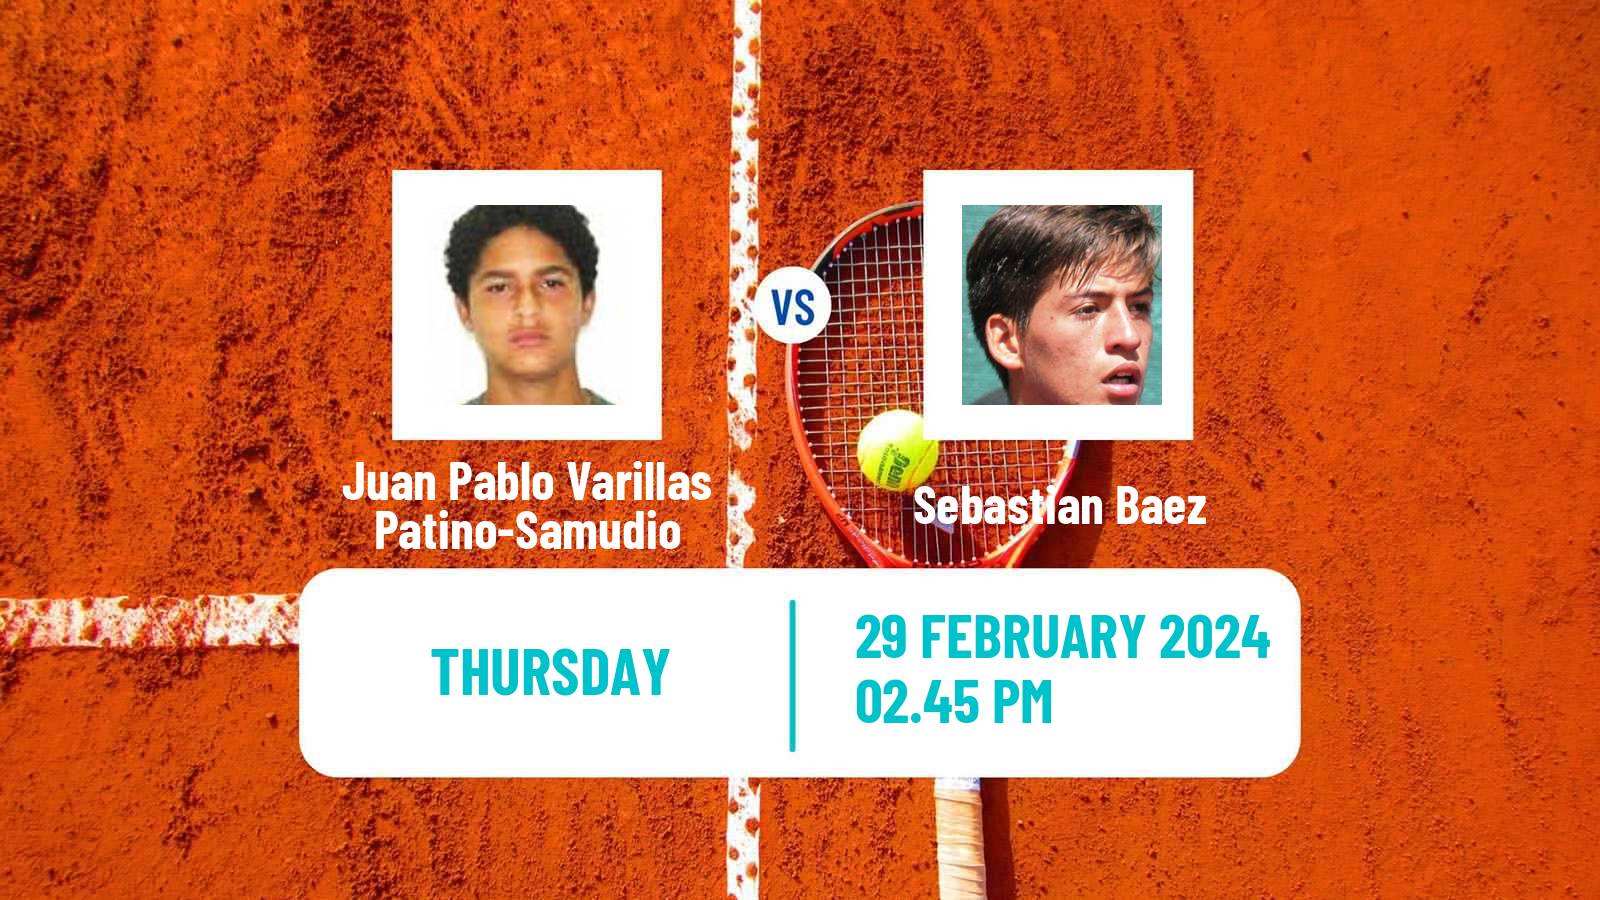 Tennis ATP Santiago Juan Pablo Varillas Patino-Samudio - Sebastian Baez